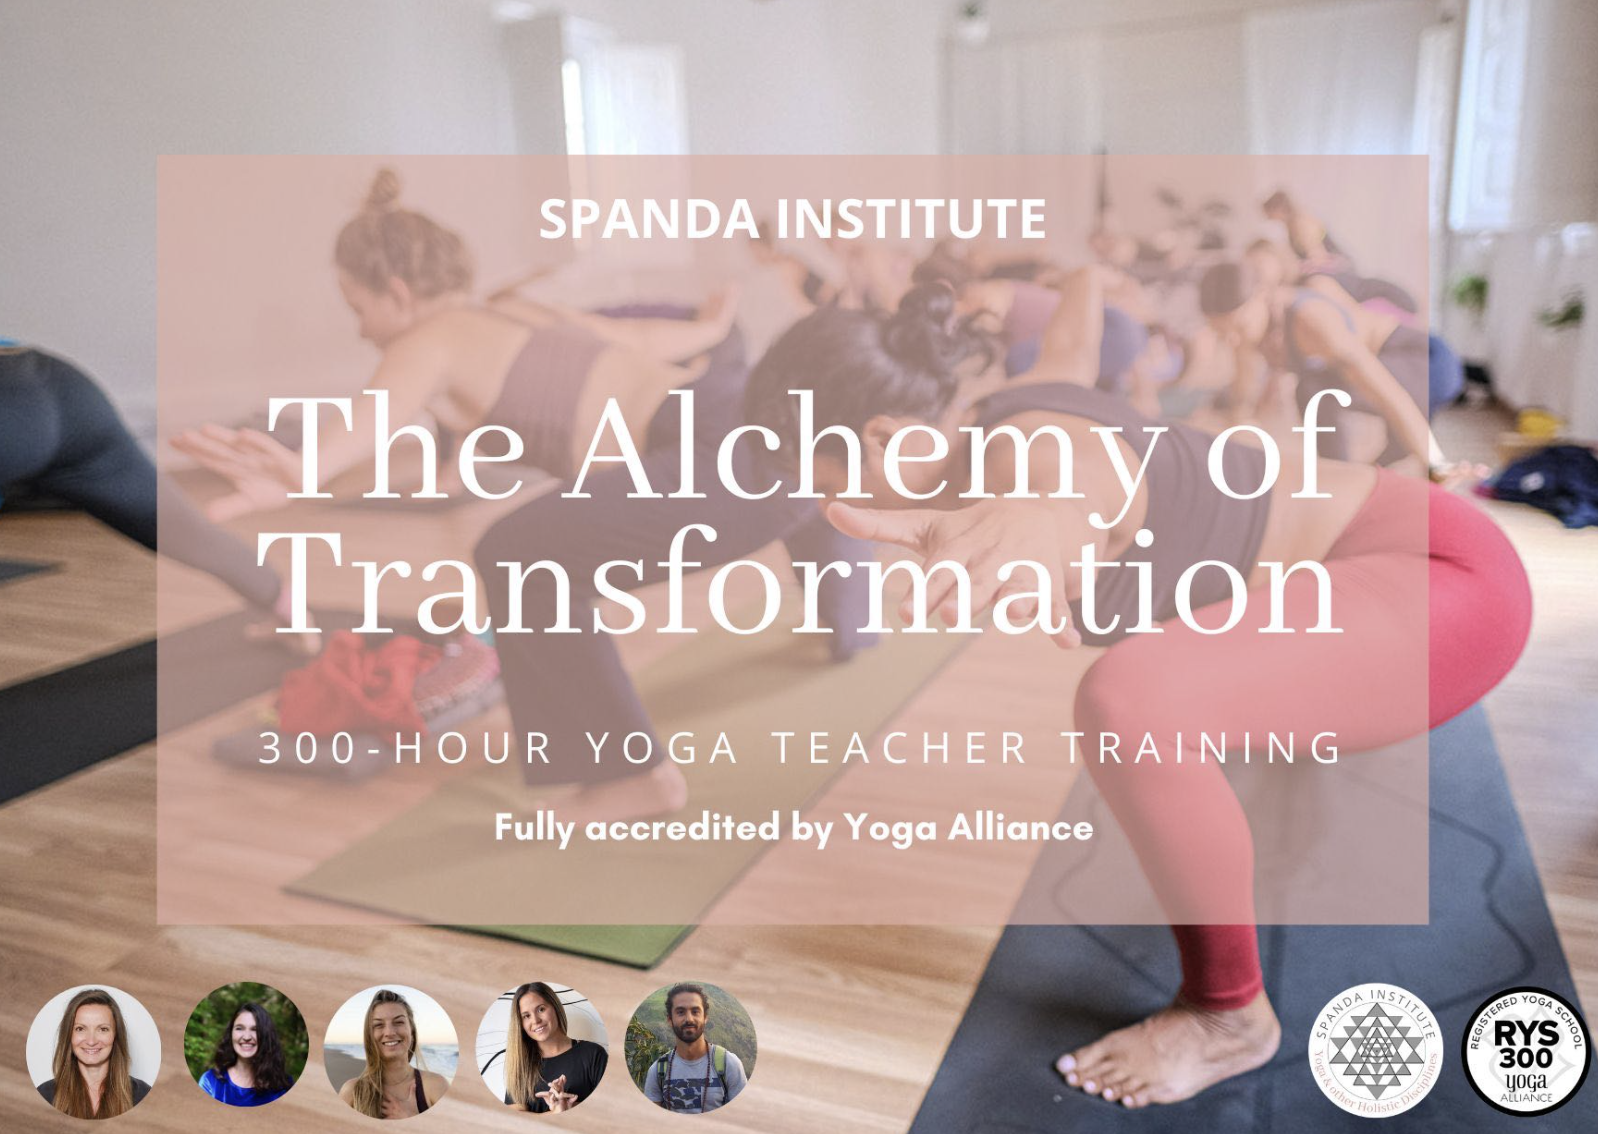 200-hour Yoga Teacher Training in Portugal — Spanda Institute